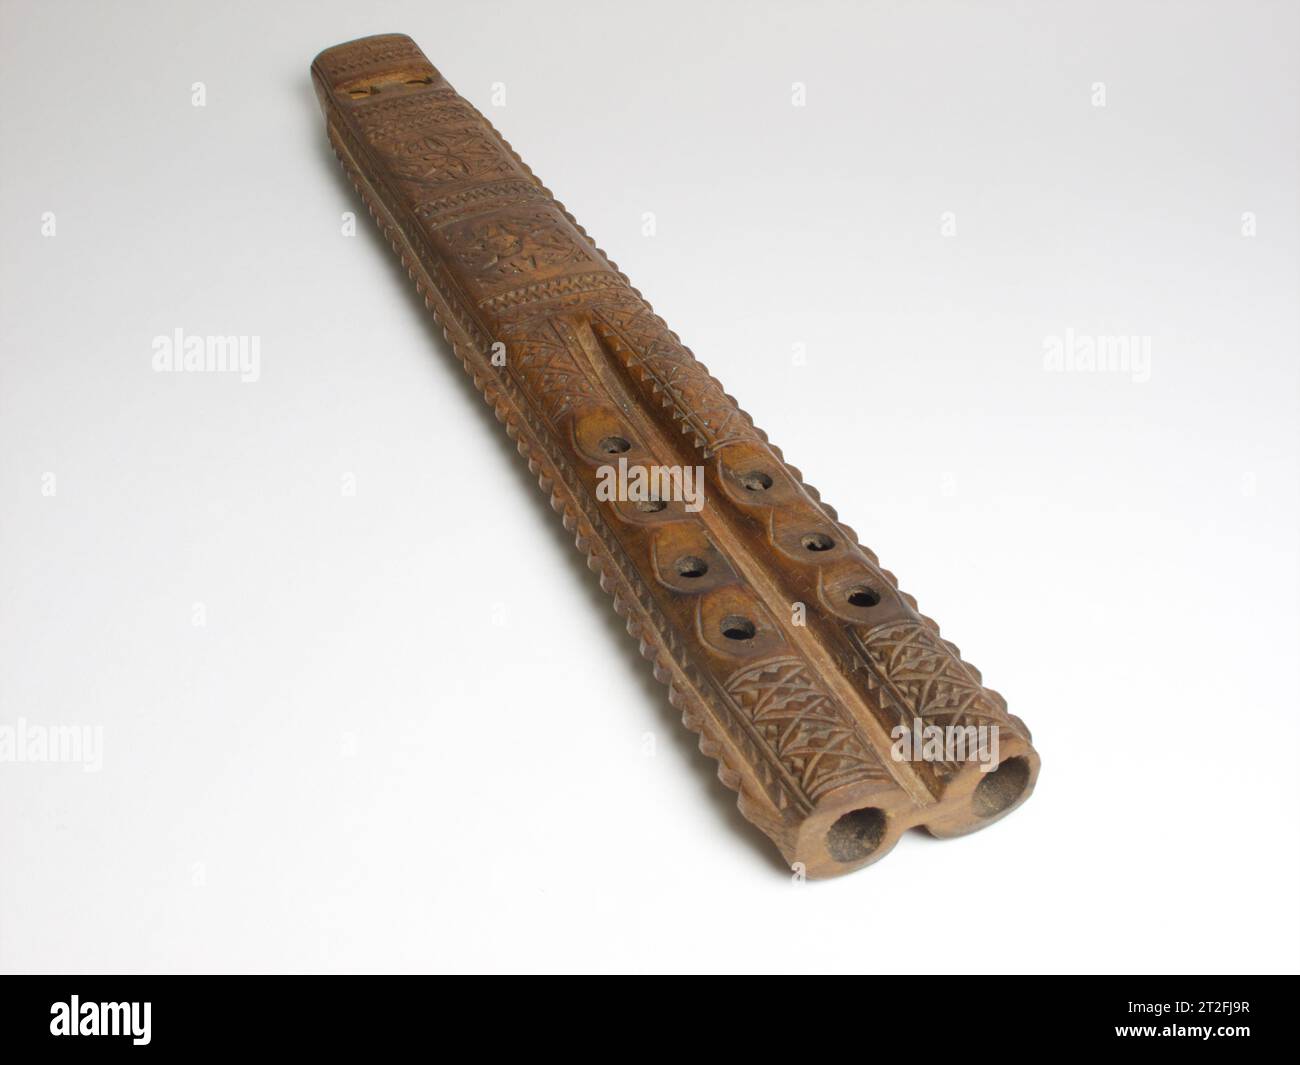 Vintage húngaro doble flauta de madera con decoración tallada a mano. El instrumento musical mide 33cm de largo. tapa Foto de stock